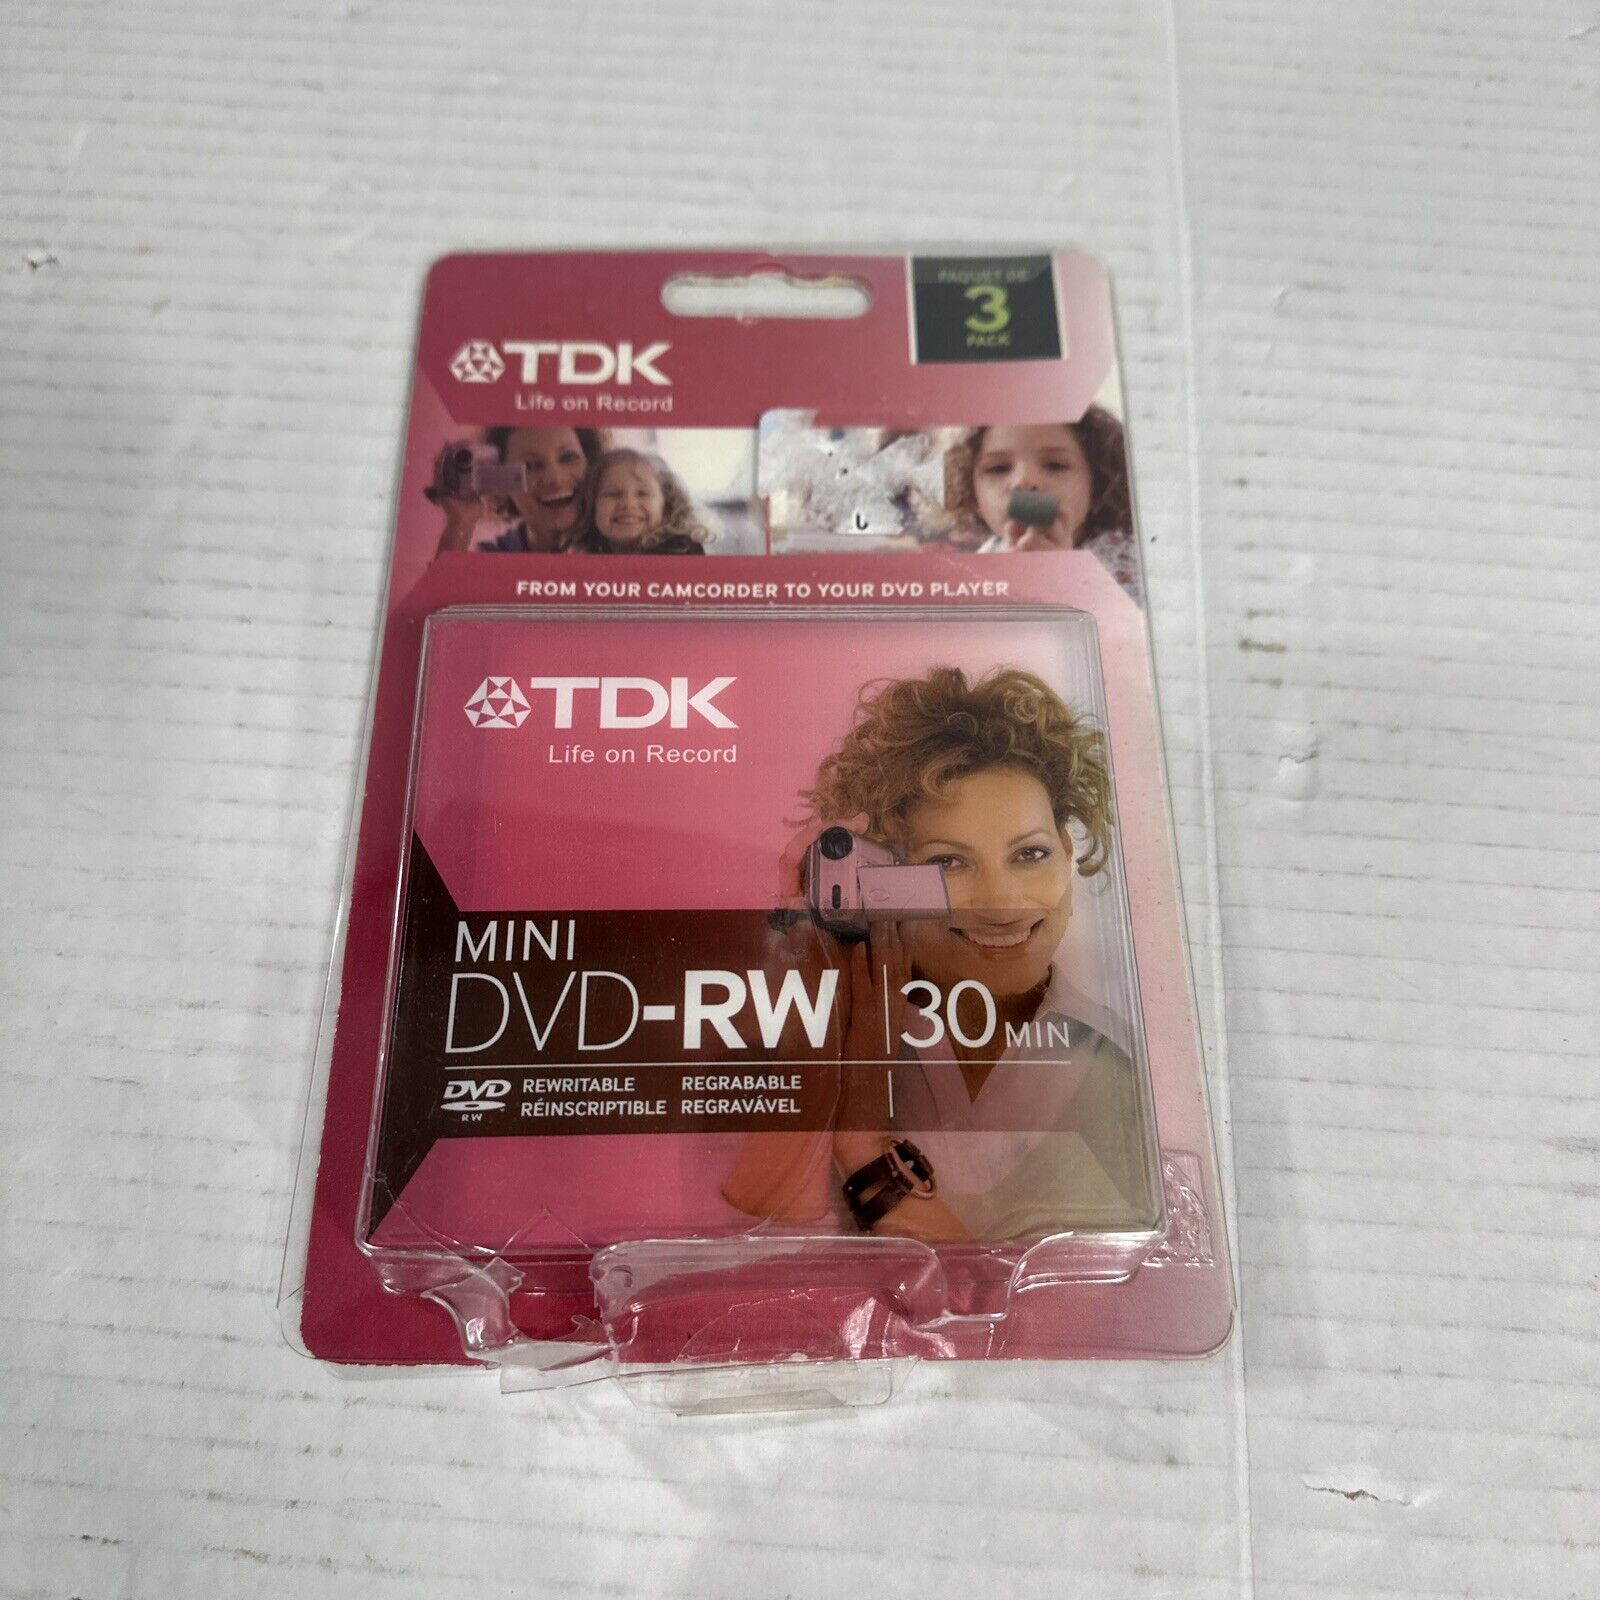 TDK Mini DVD-RW 30 Min Brand Pack of 3 New Factory Sealed